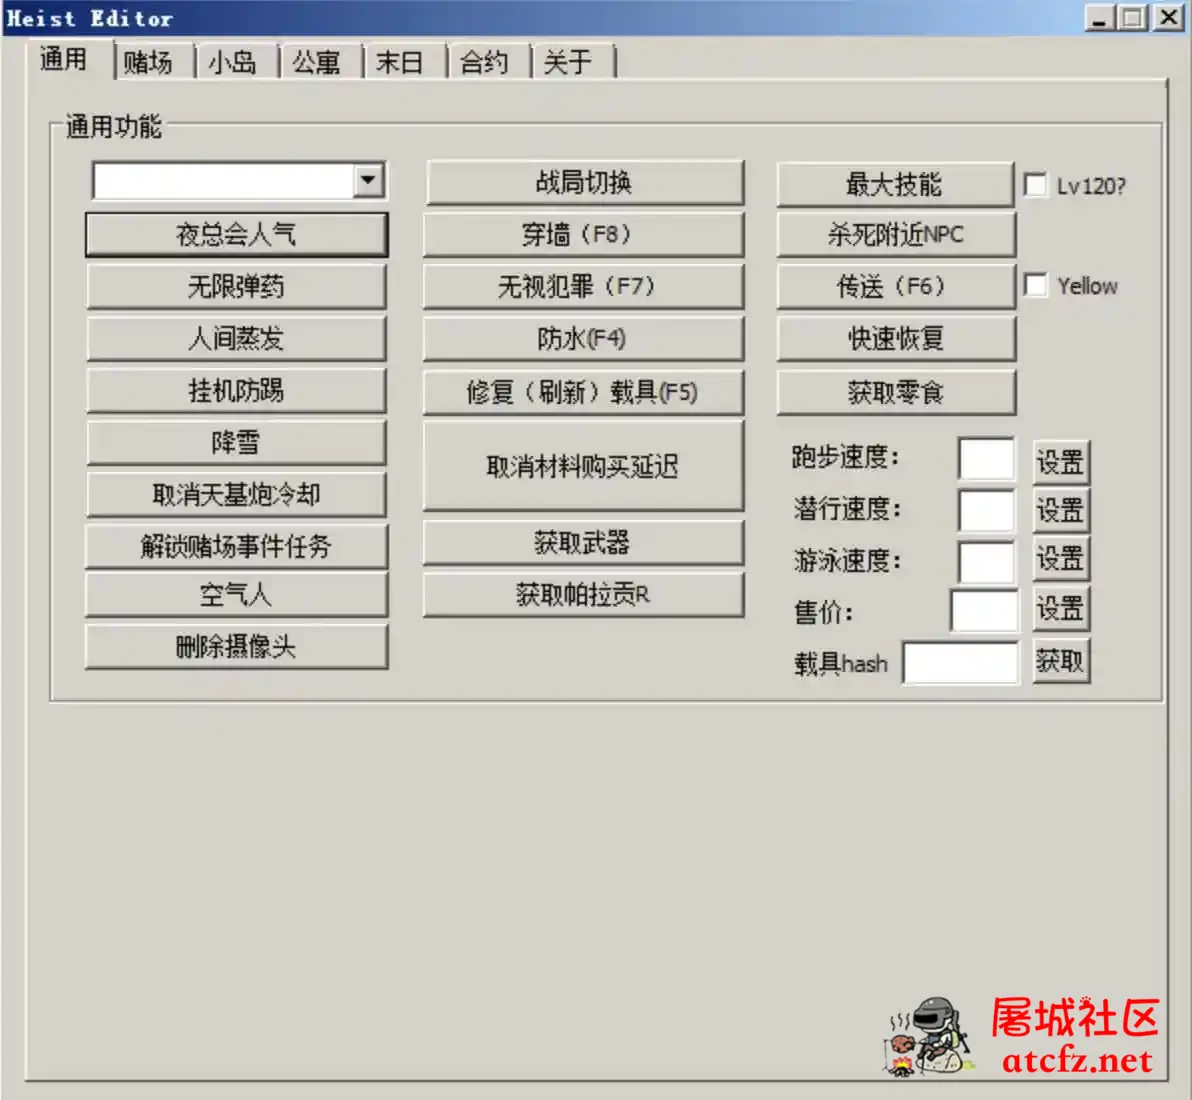 GTA5 Heist Editor外部抢劫编辑器 v3.5.7 屠城辅助网www.tcfz1.com6879